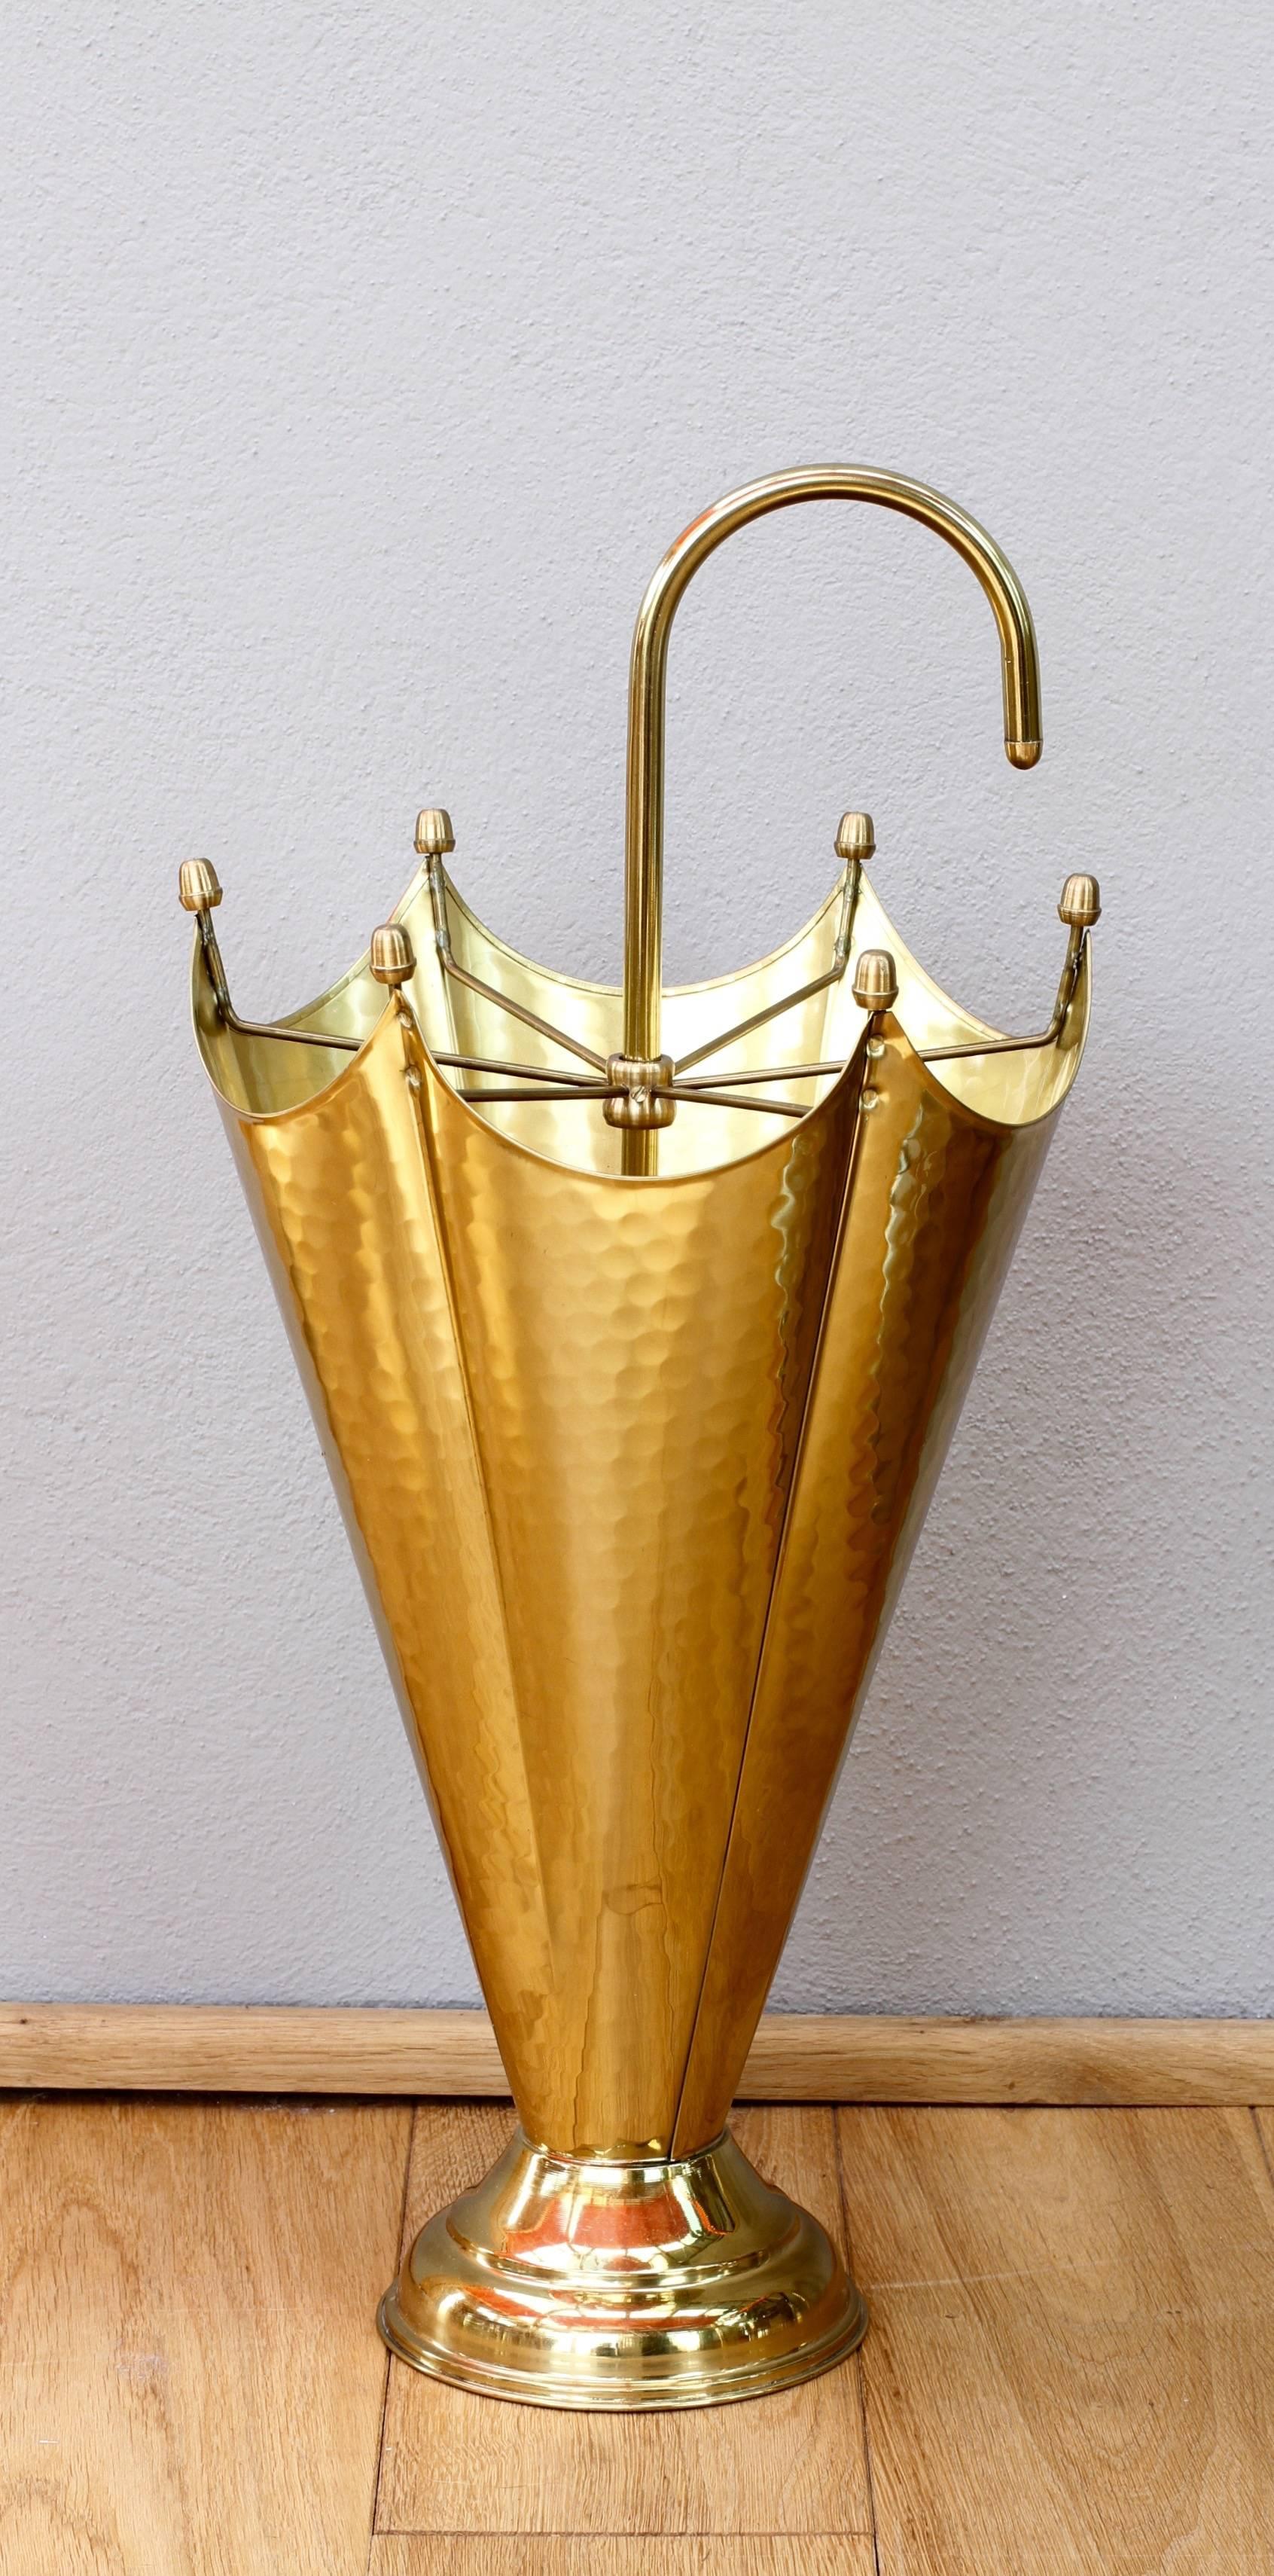 20th Century Whimsical 1950s Italian Hammered Brass Umbrella Stand / Holder